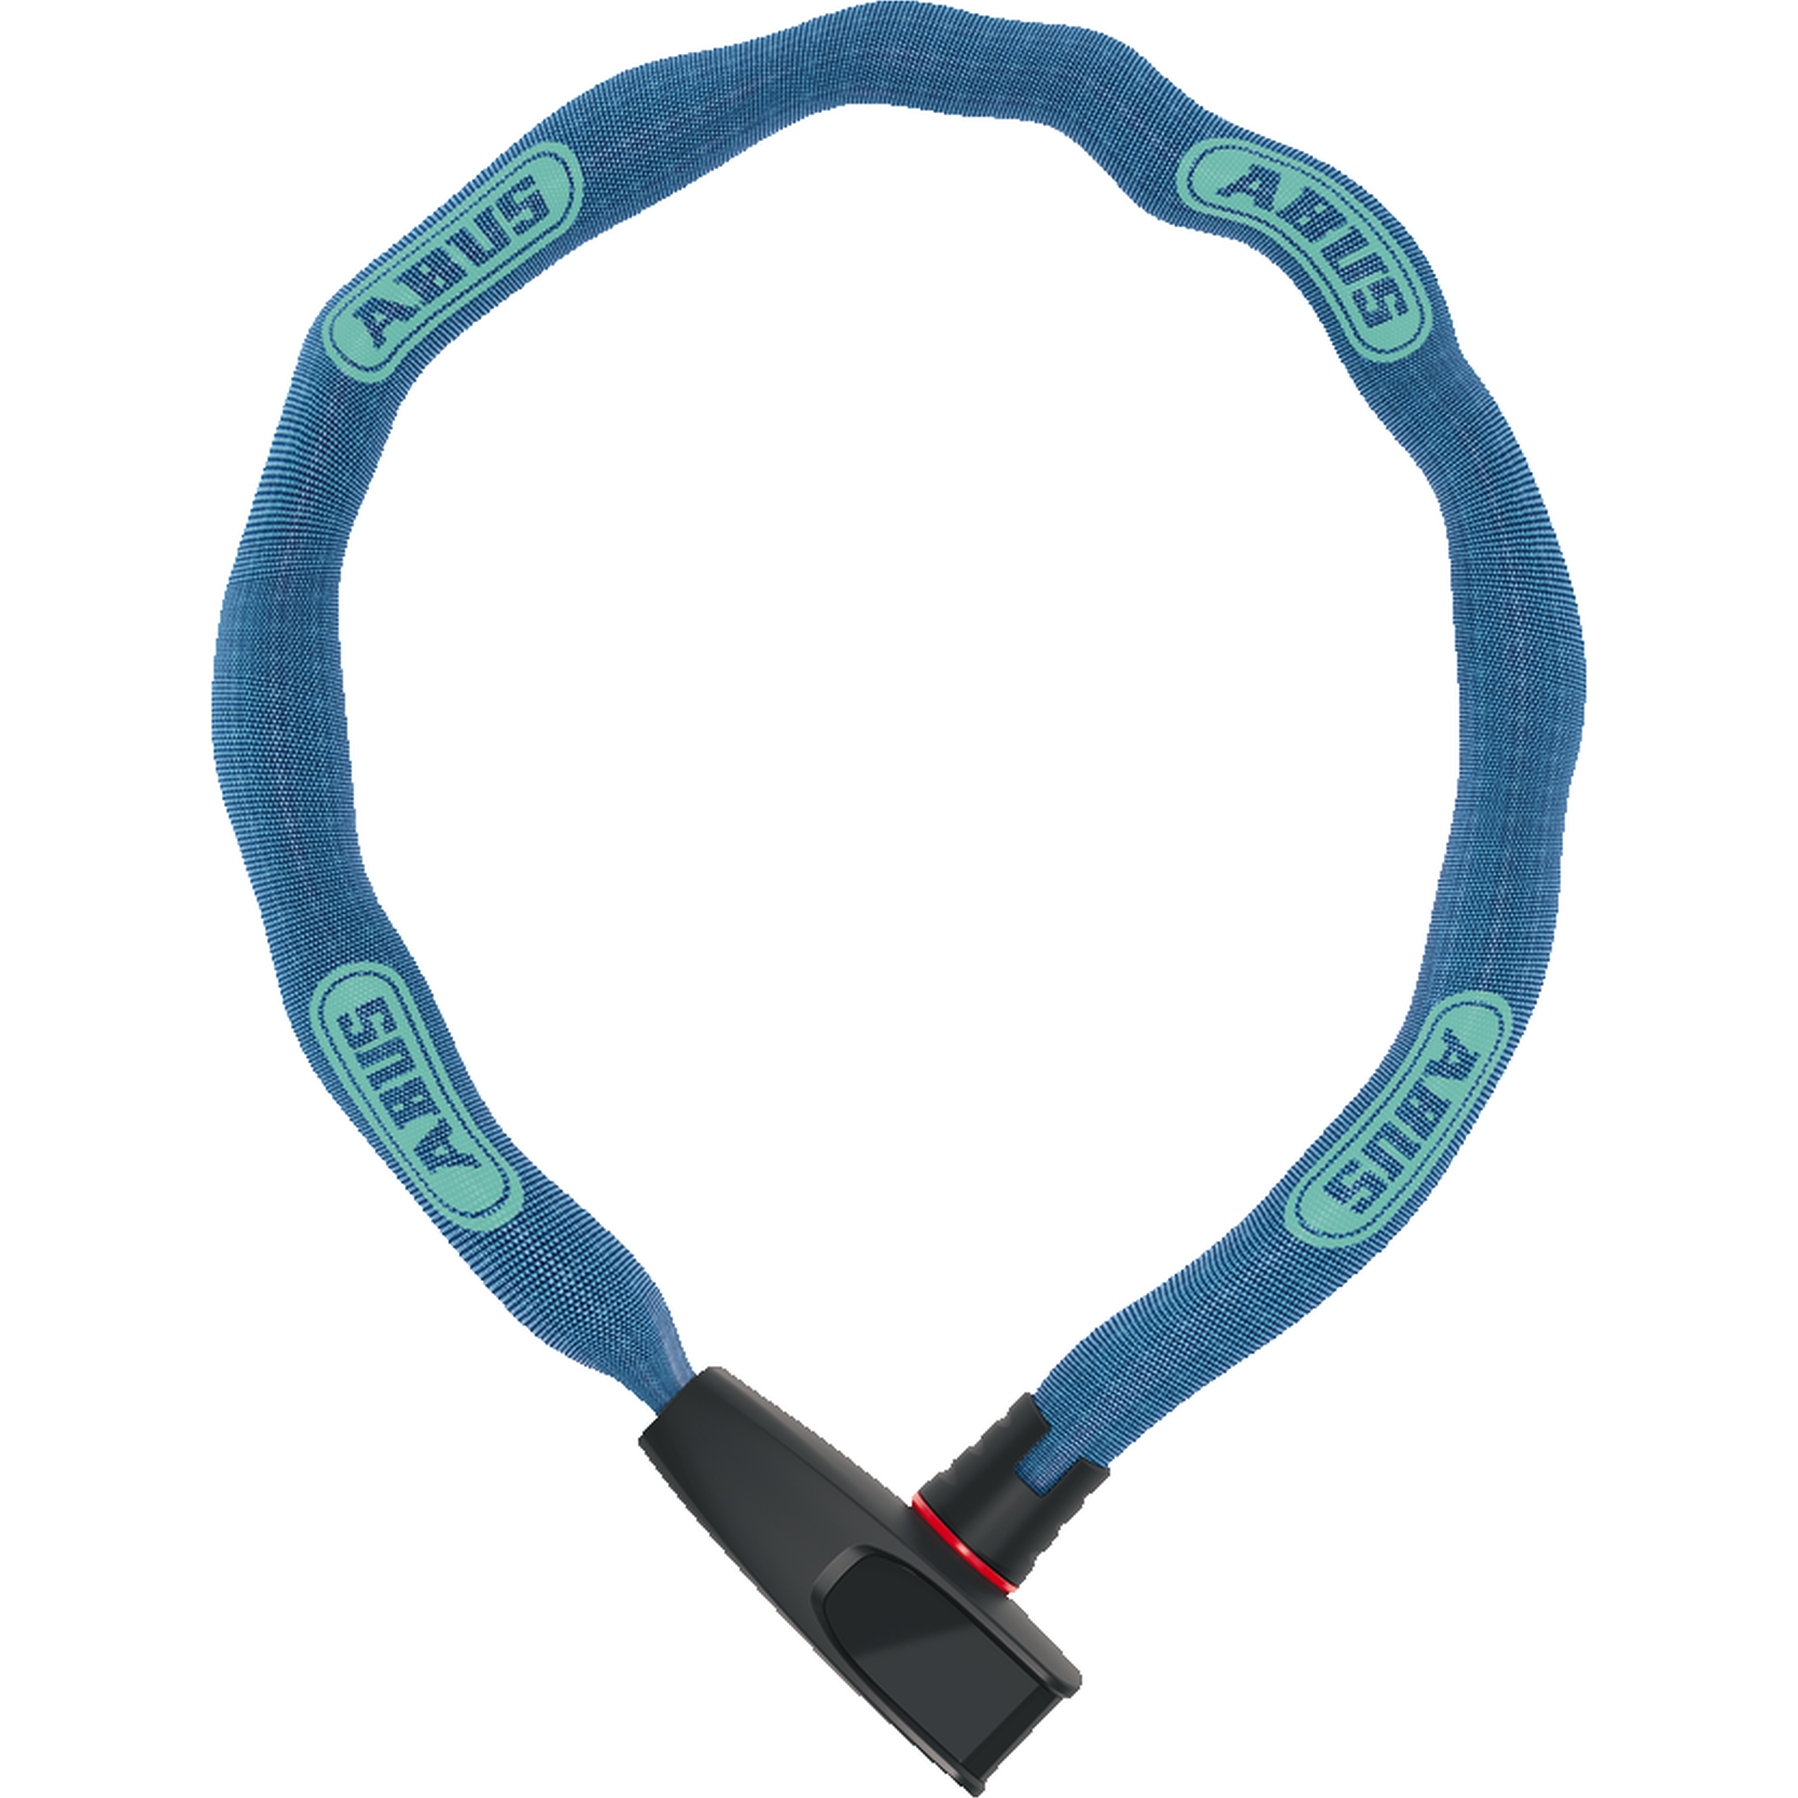 Productfoto van ABUS Catena 6806K/85 Chain Lock - neon blue